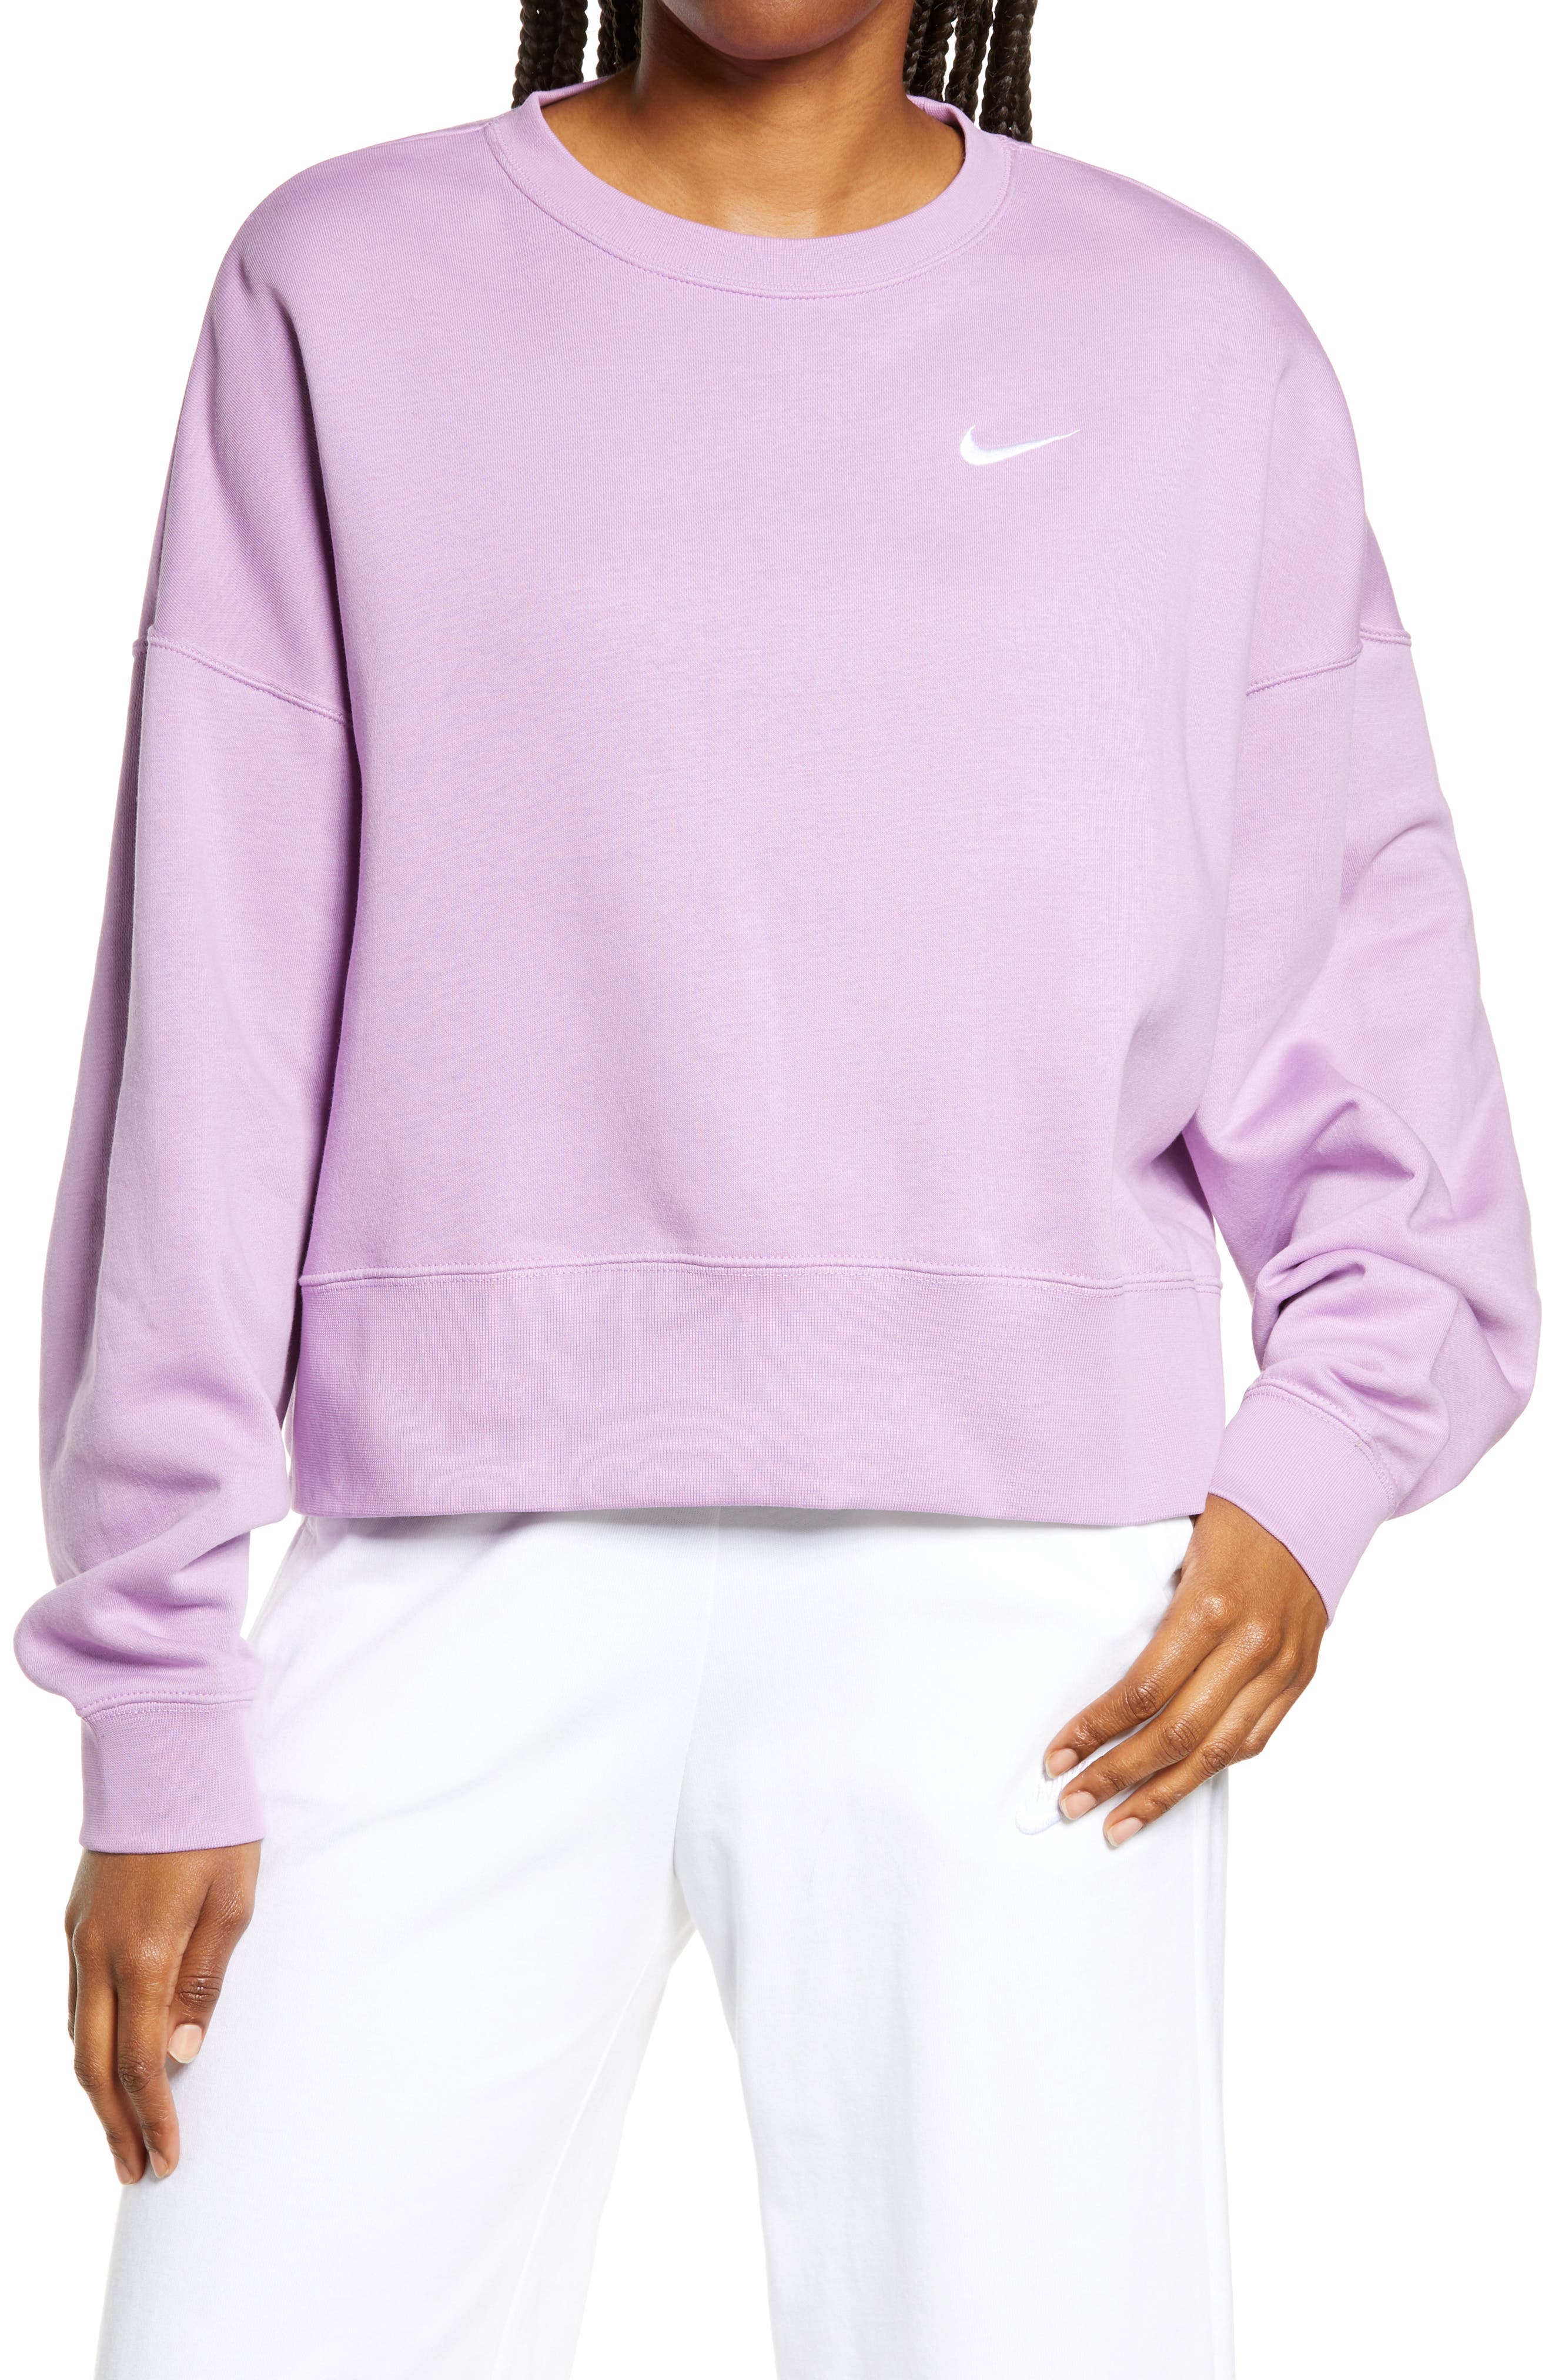 pink nike sweater womens